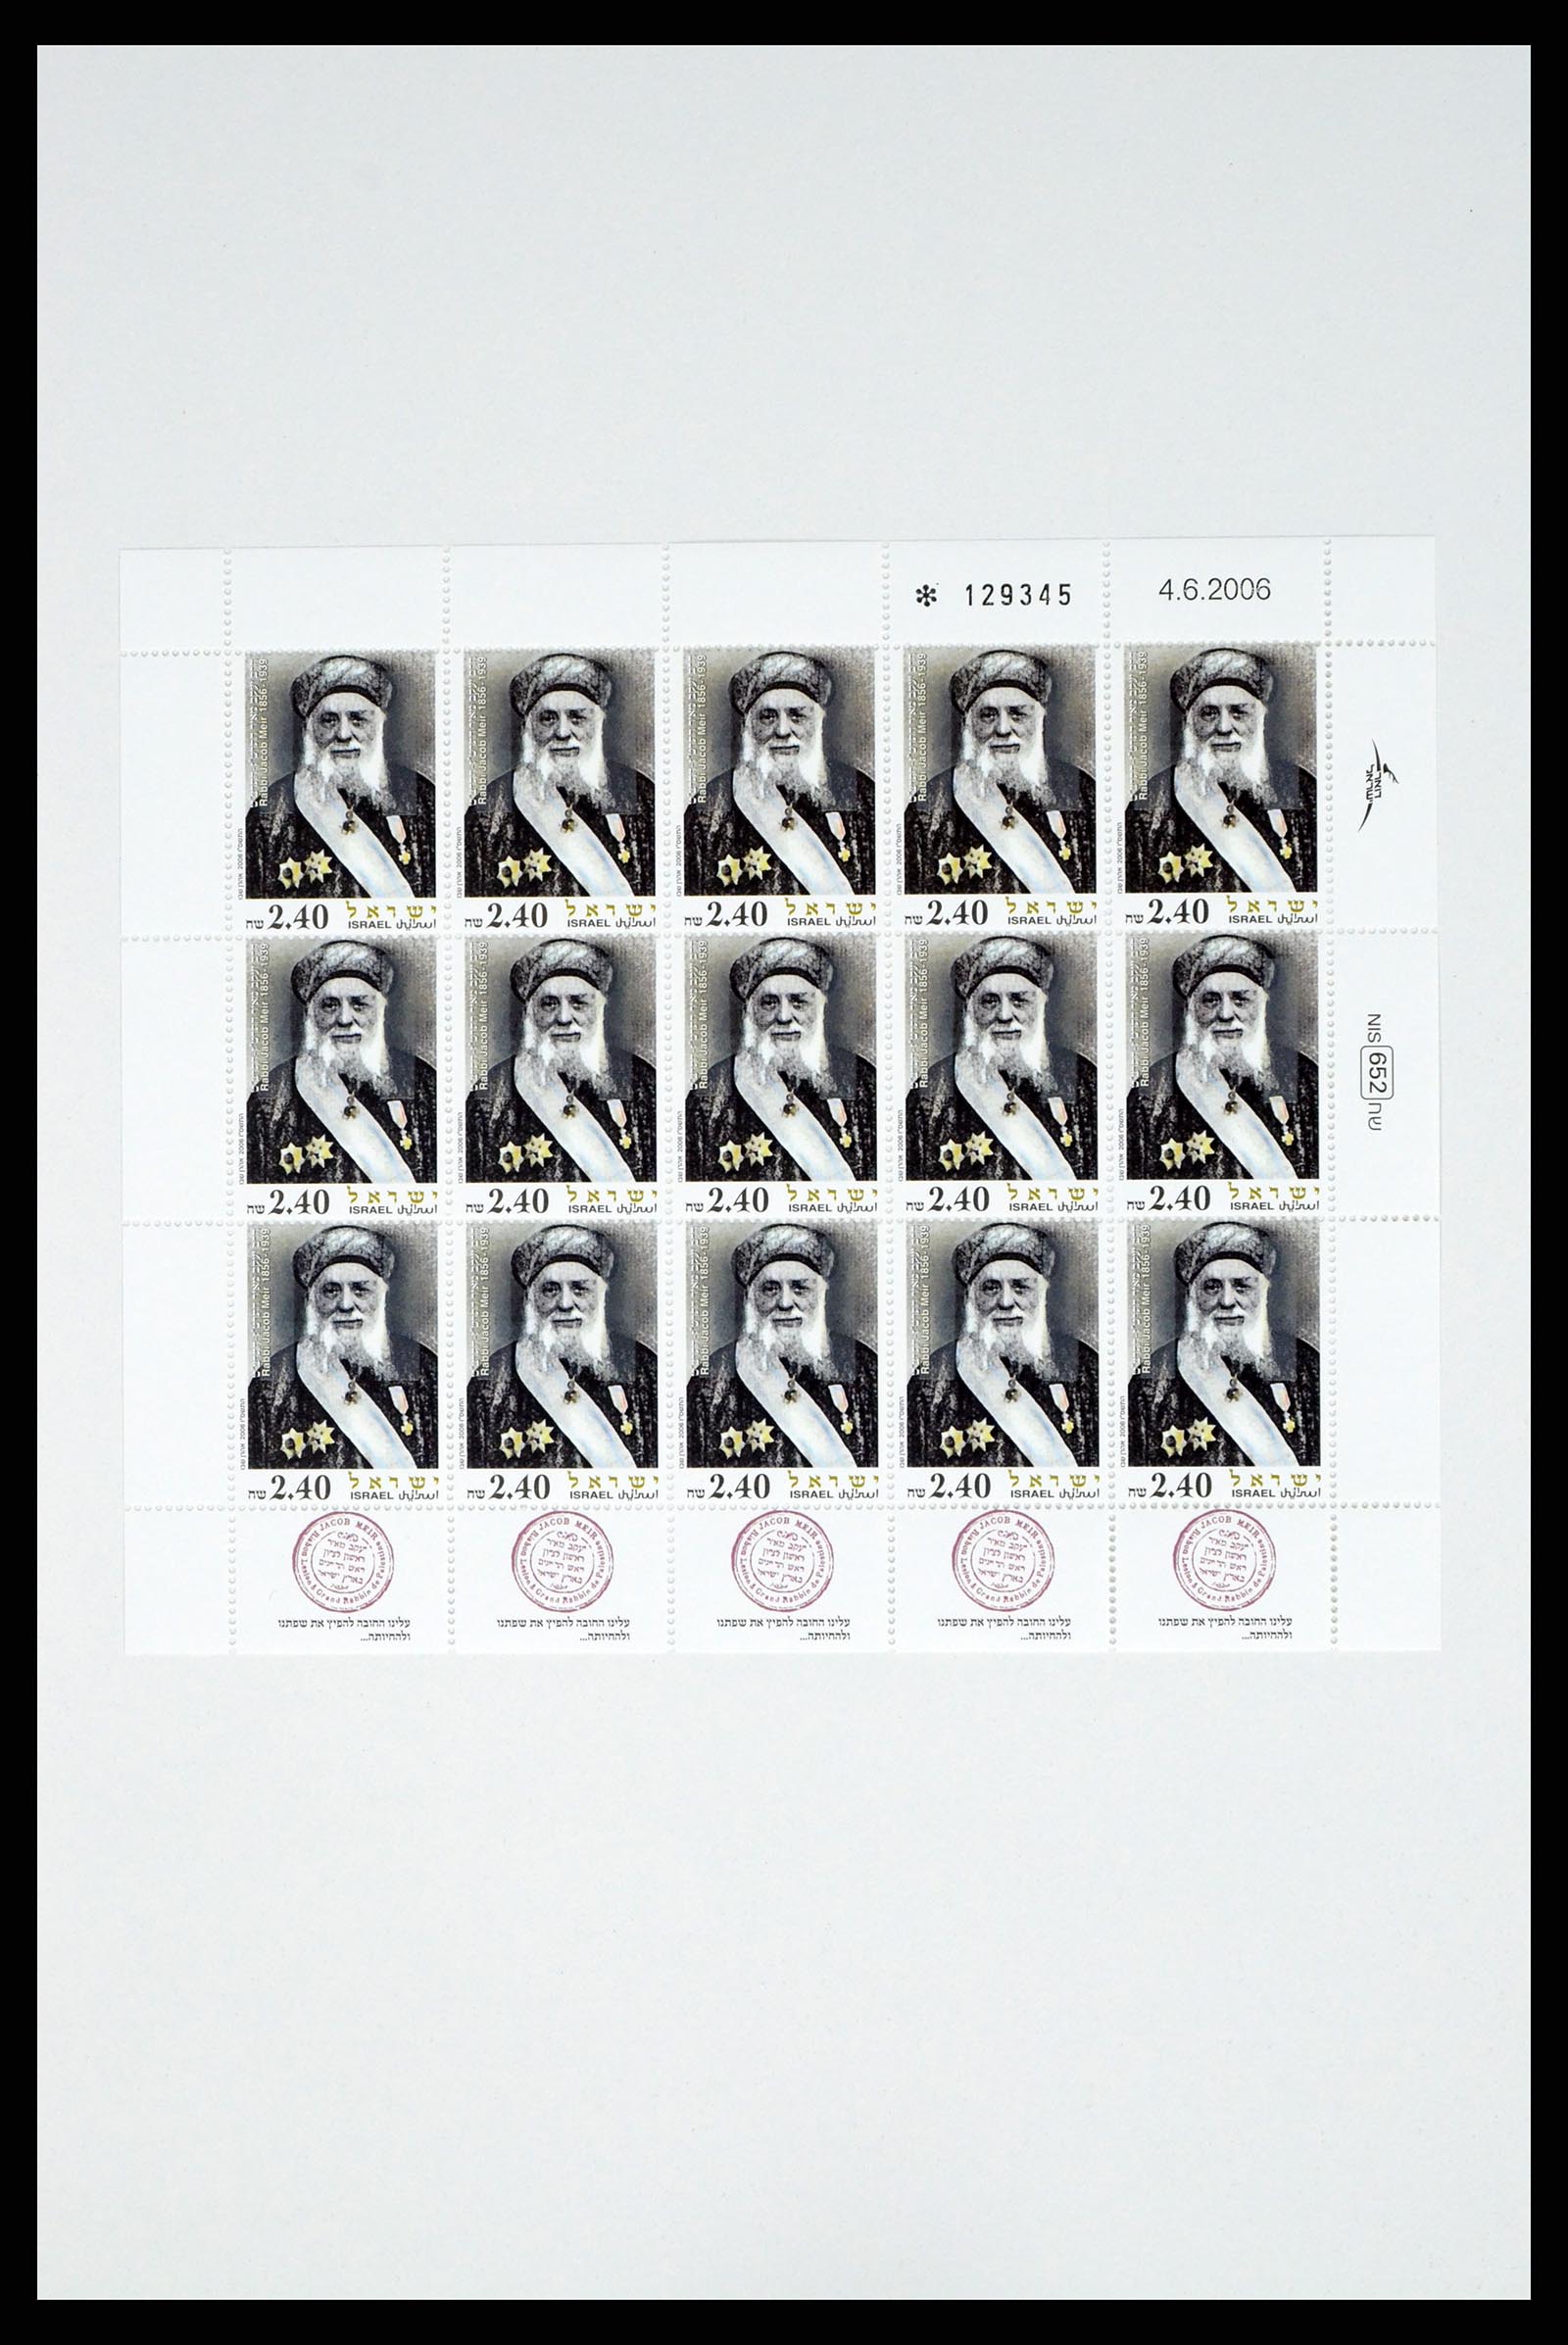 37779 370 - Stamp collection 37779 Israel sheetlets 1986-2009.